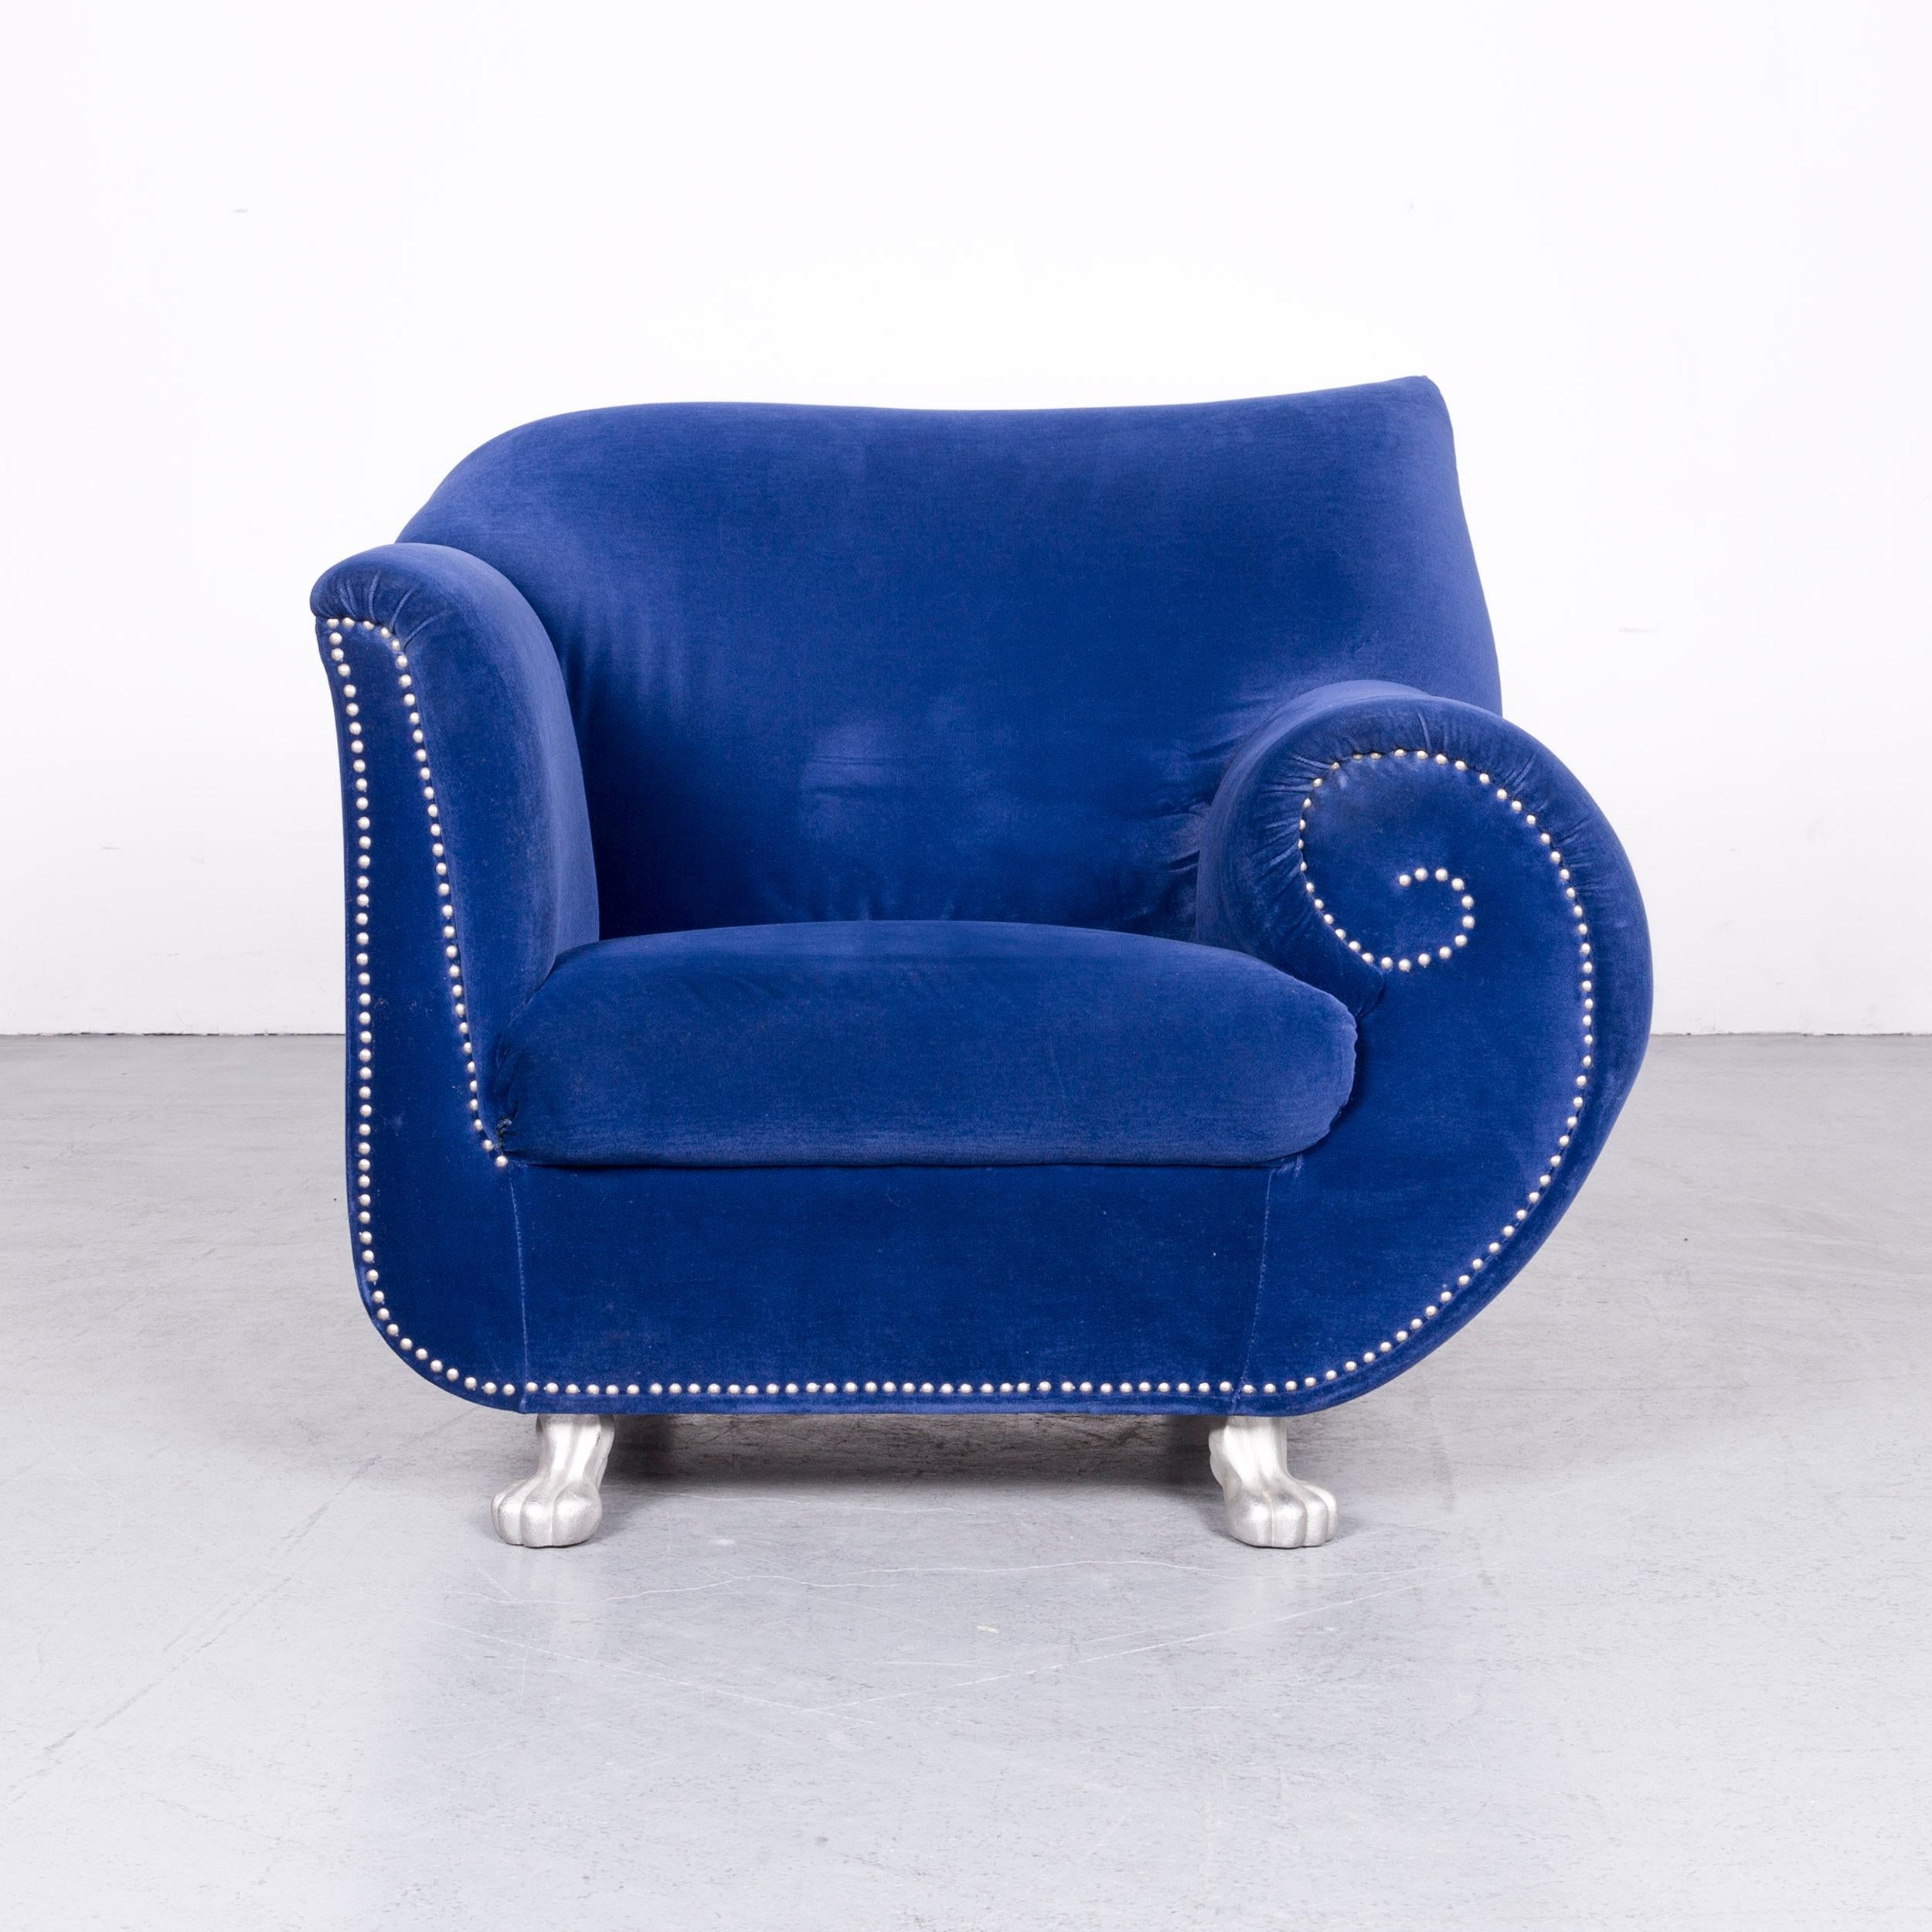 We bring to you a Bretz Gaudi designer velvet fabric armchair blue one-seat chair.



























